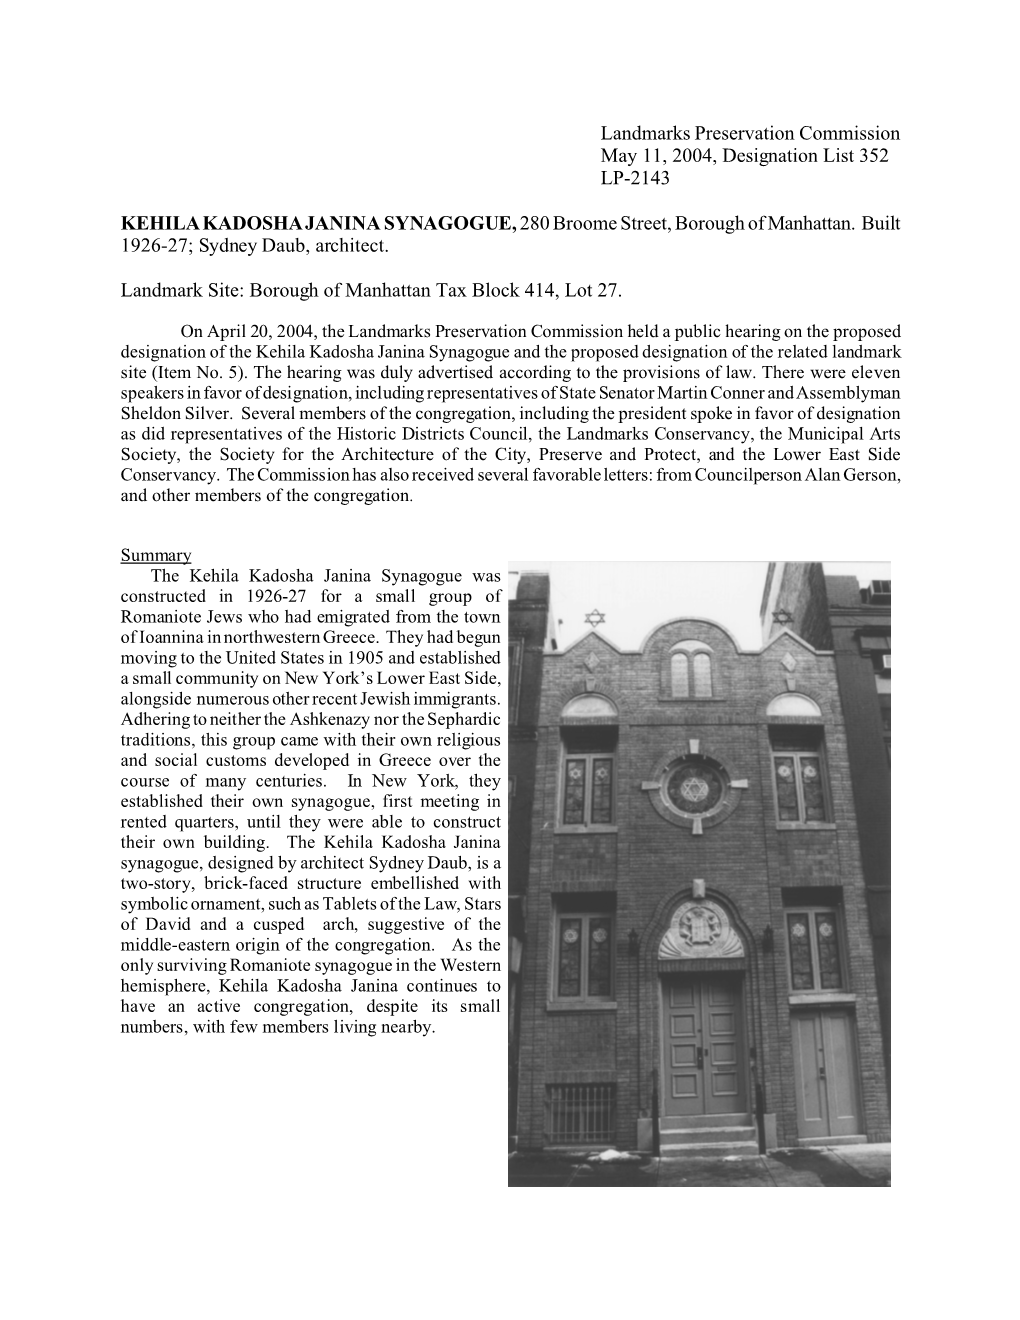 Kehila Kadosha Janina Synagogue Designation Report